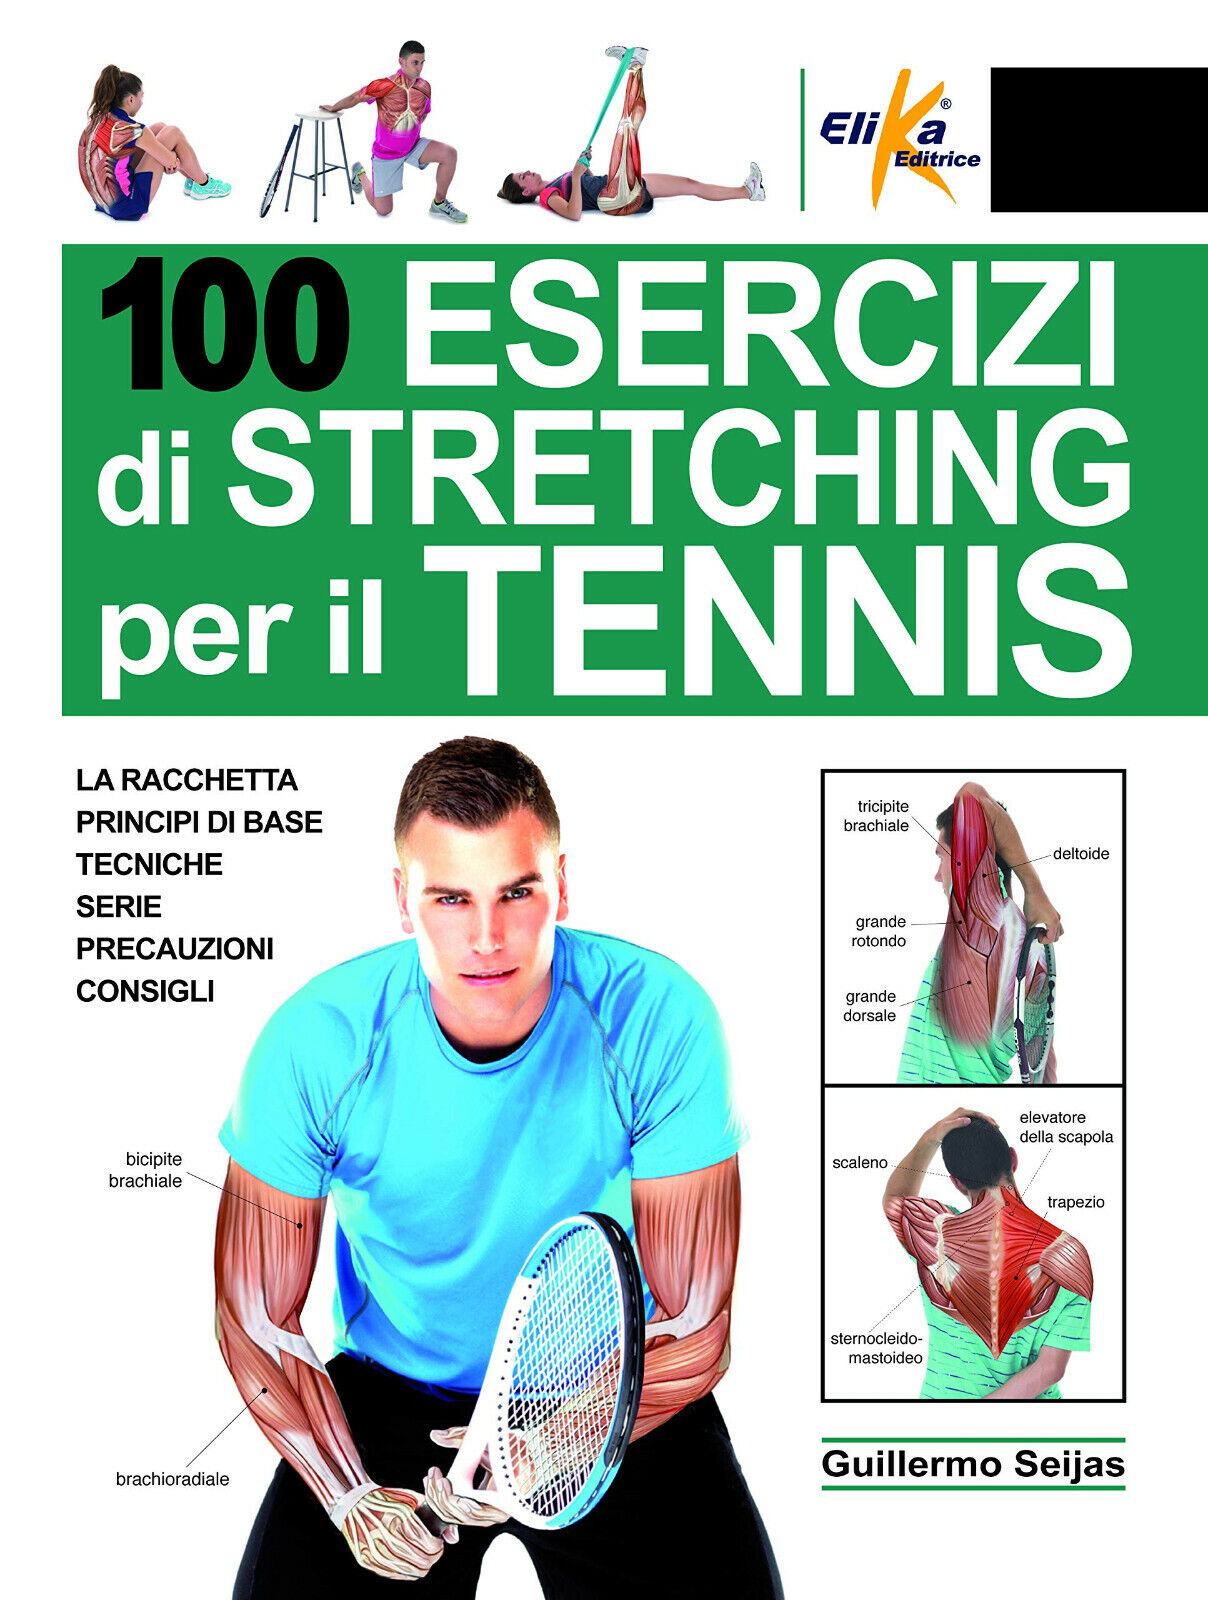 100 esercizi di stretching per il tennis - Guillermo Seijas - elika, 2017